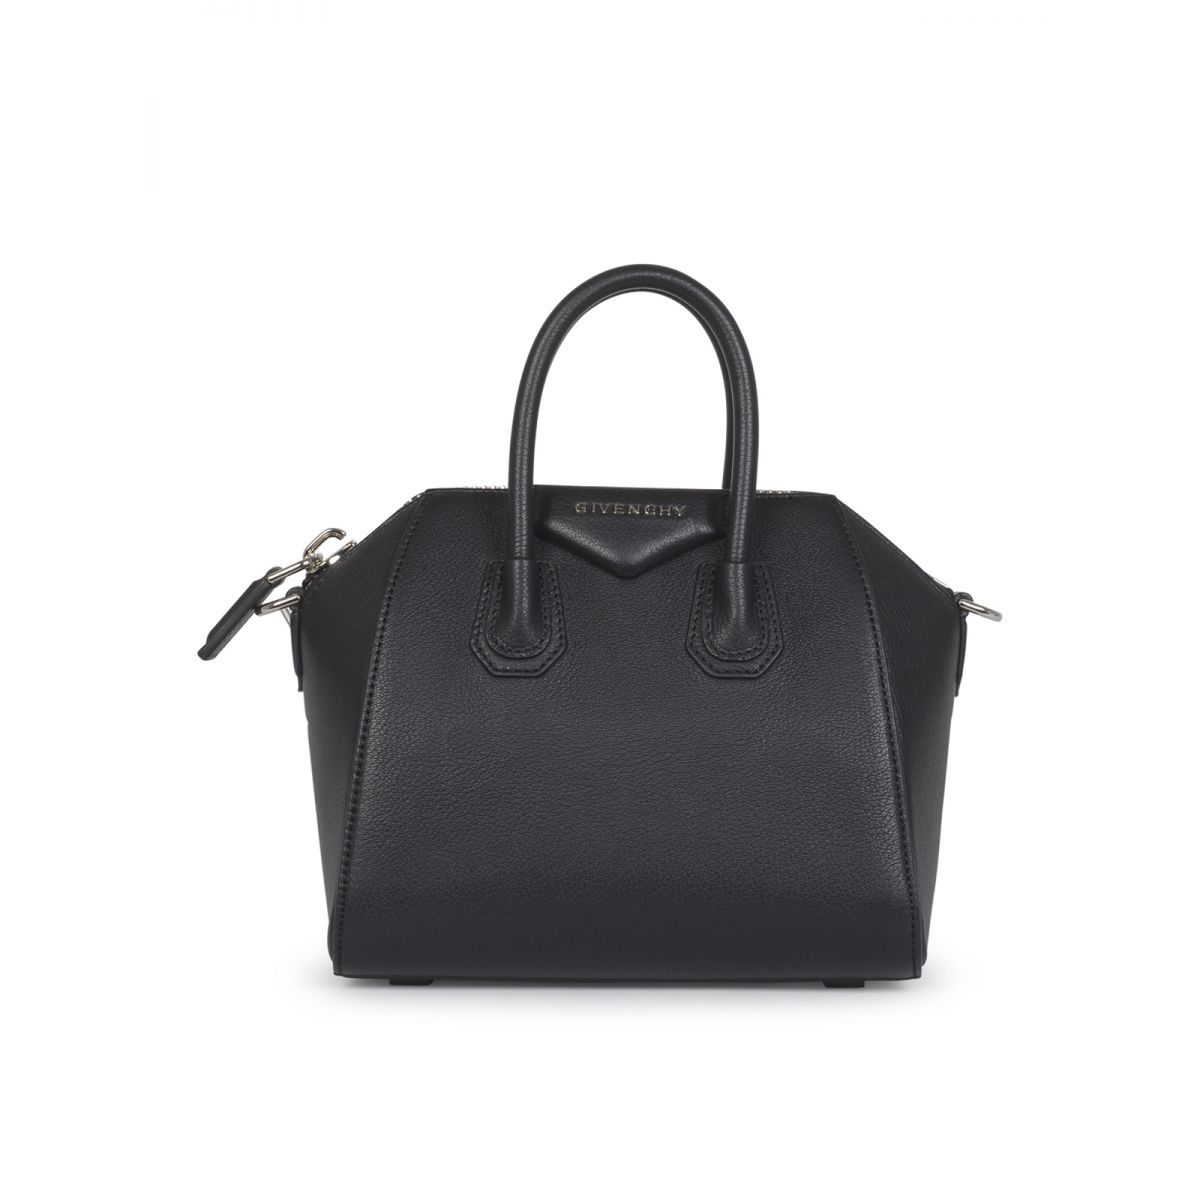 GIVENCHY - Mini Antigona bag in grained leather